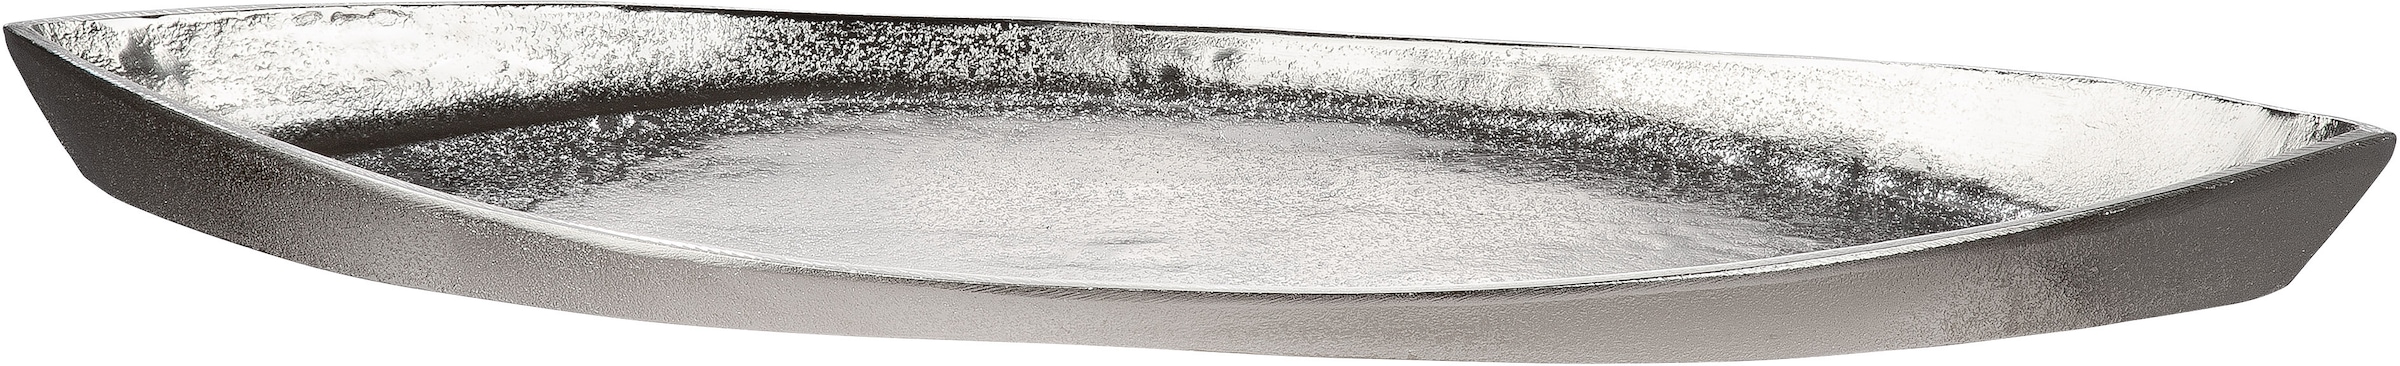 GILDE Schale »Boat«, 1 tlg., aus Alumimium, Antik-Finish, silberfarbene Struktur, ideal zum Dekorieren